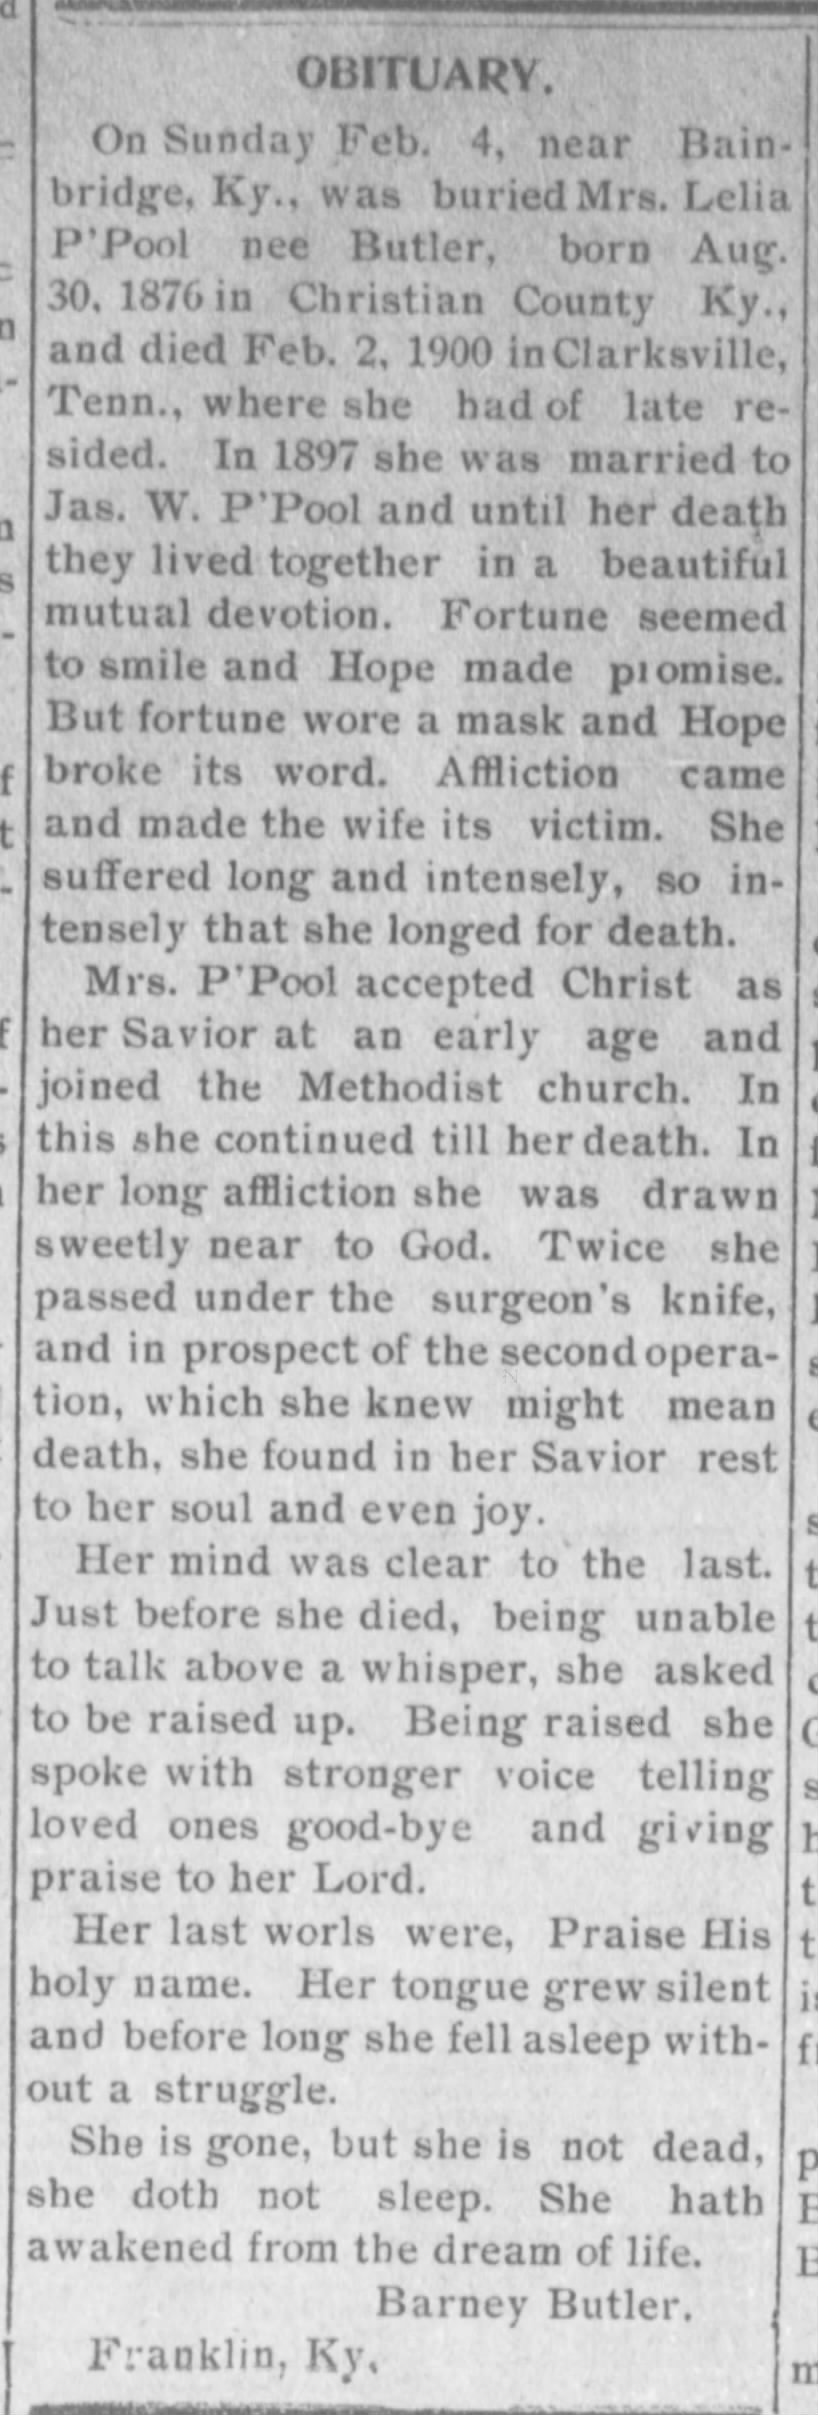 Hopkinsville Kentuckian (Hopkinsville, KY)   Friday, 16 February 1900  Lelia Butler P'Pool Obit